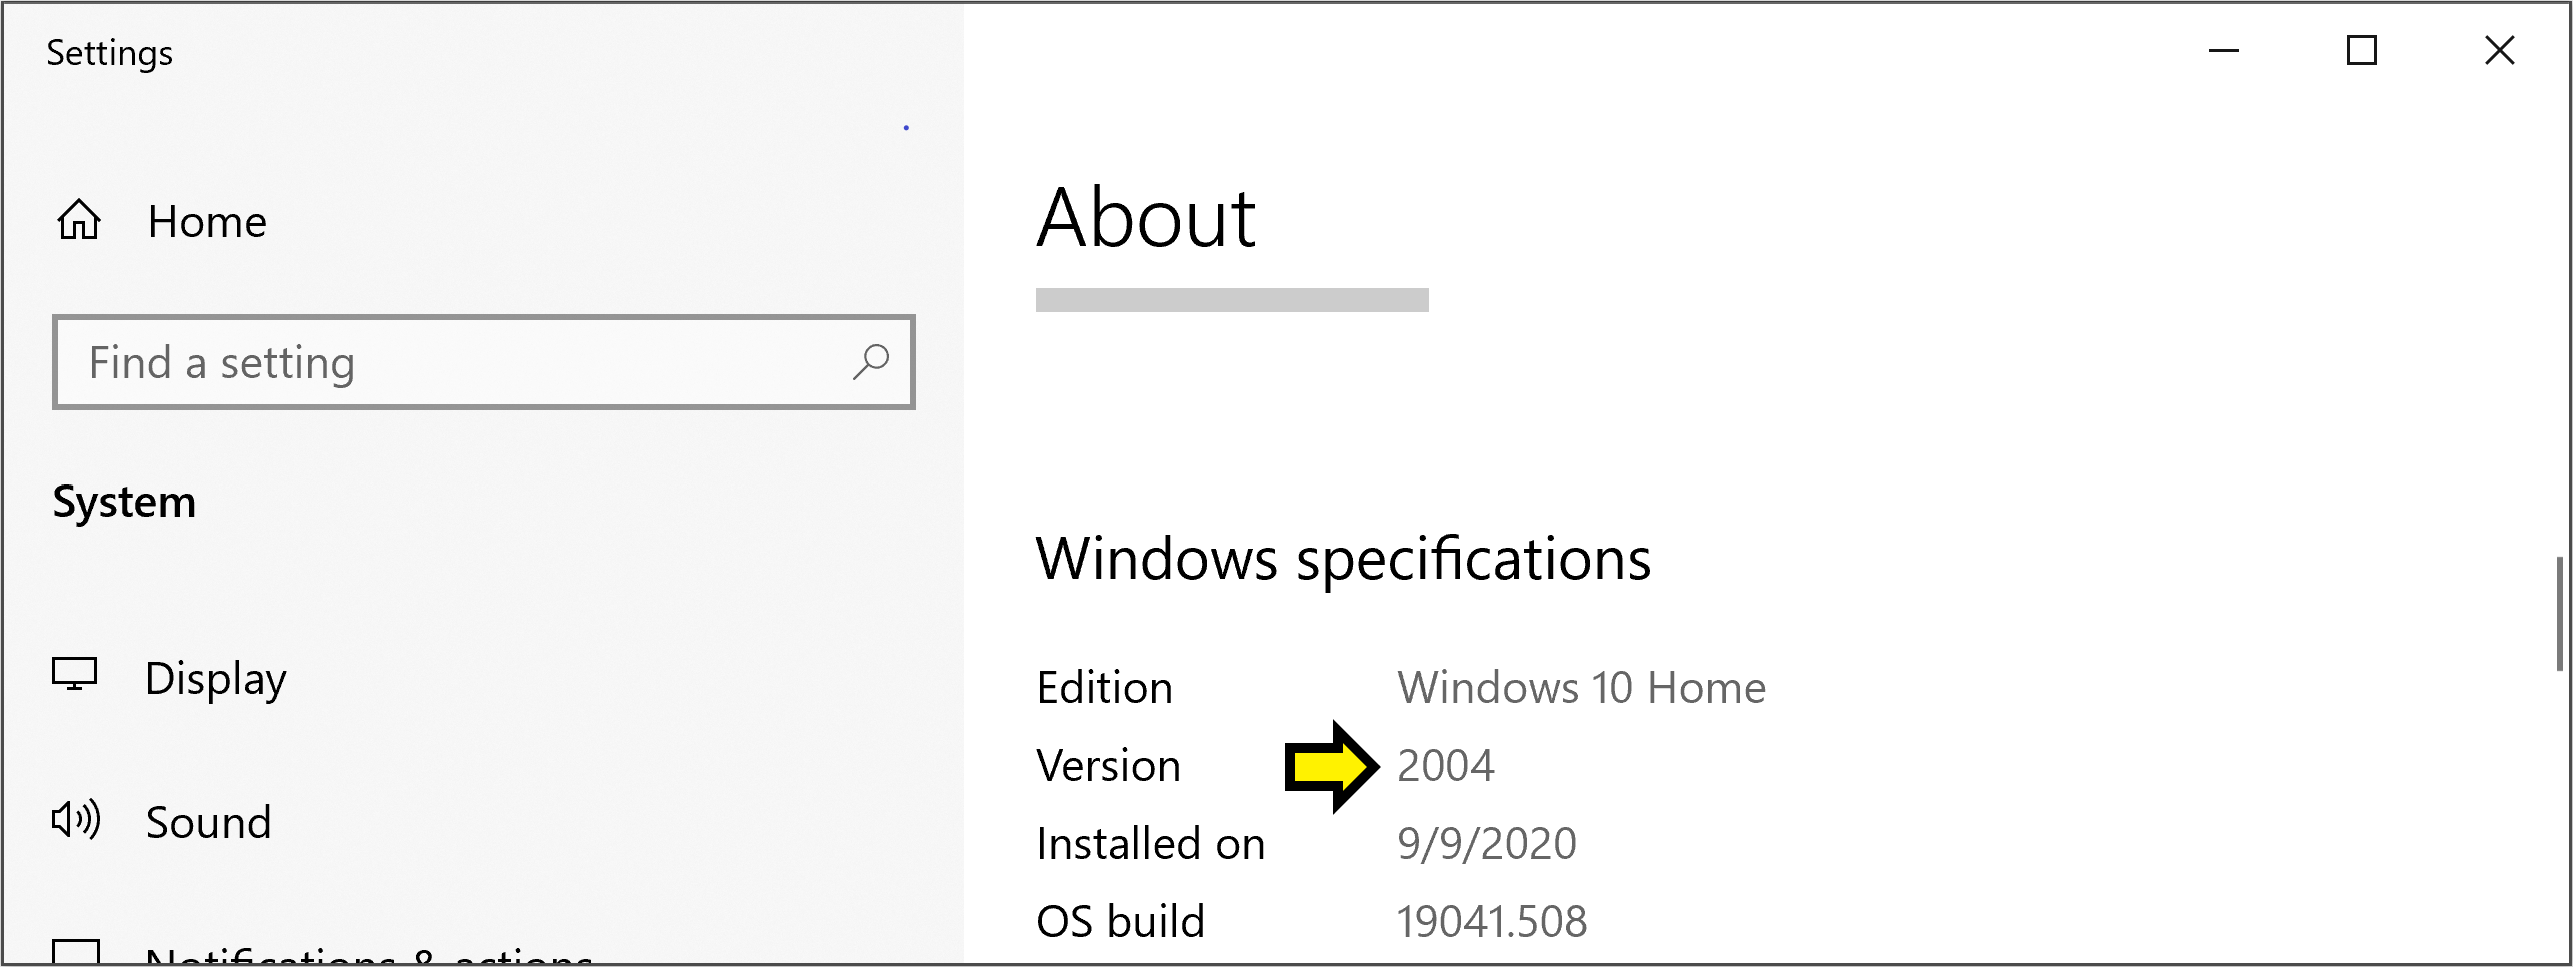 PC edition screenshot - Windows